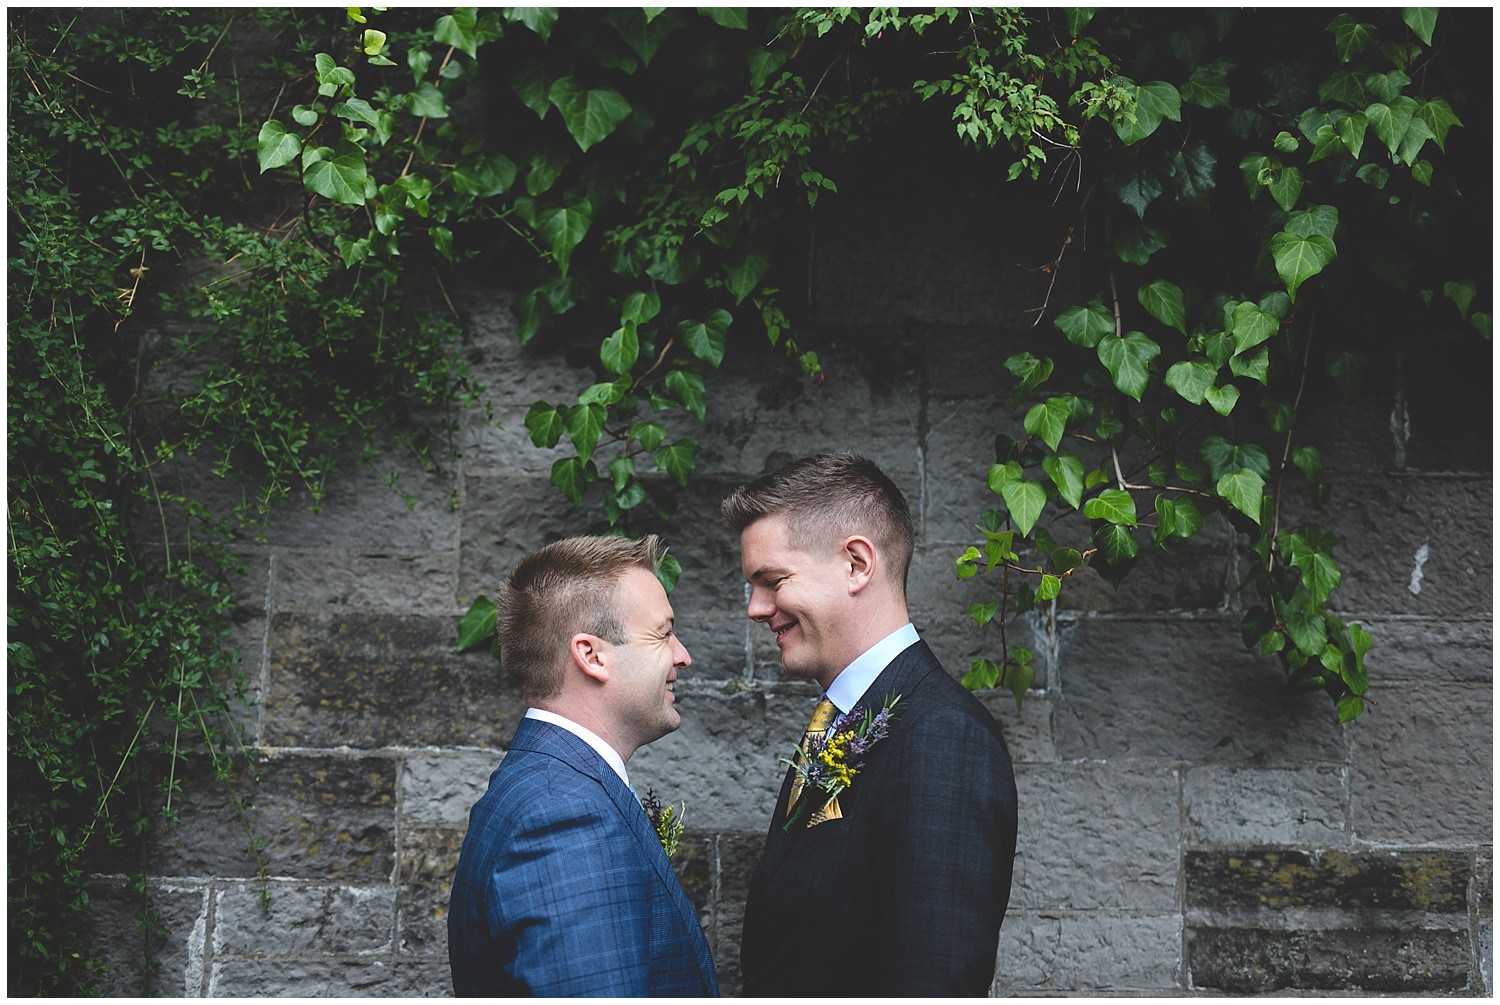 Wild things wed Dublin wedding photographer